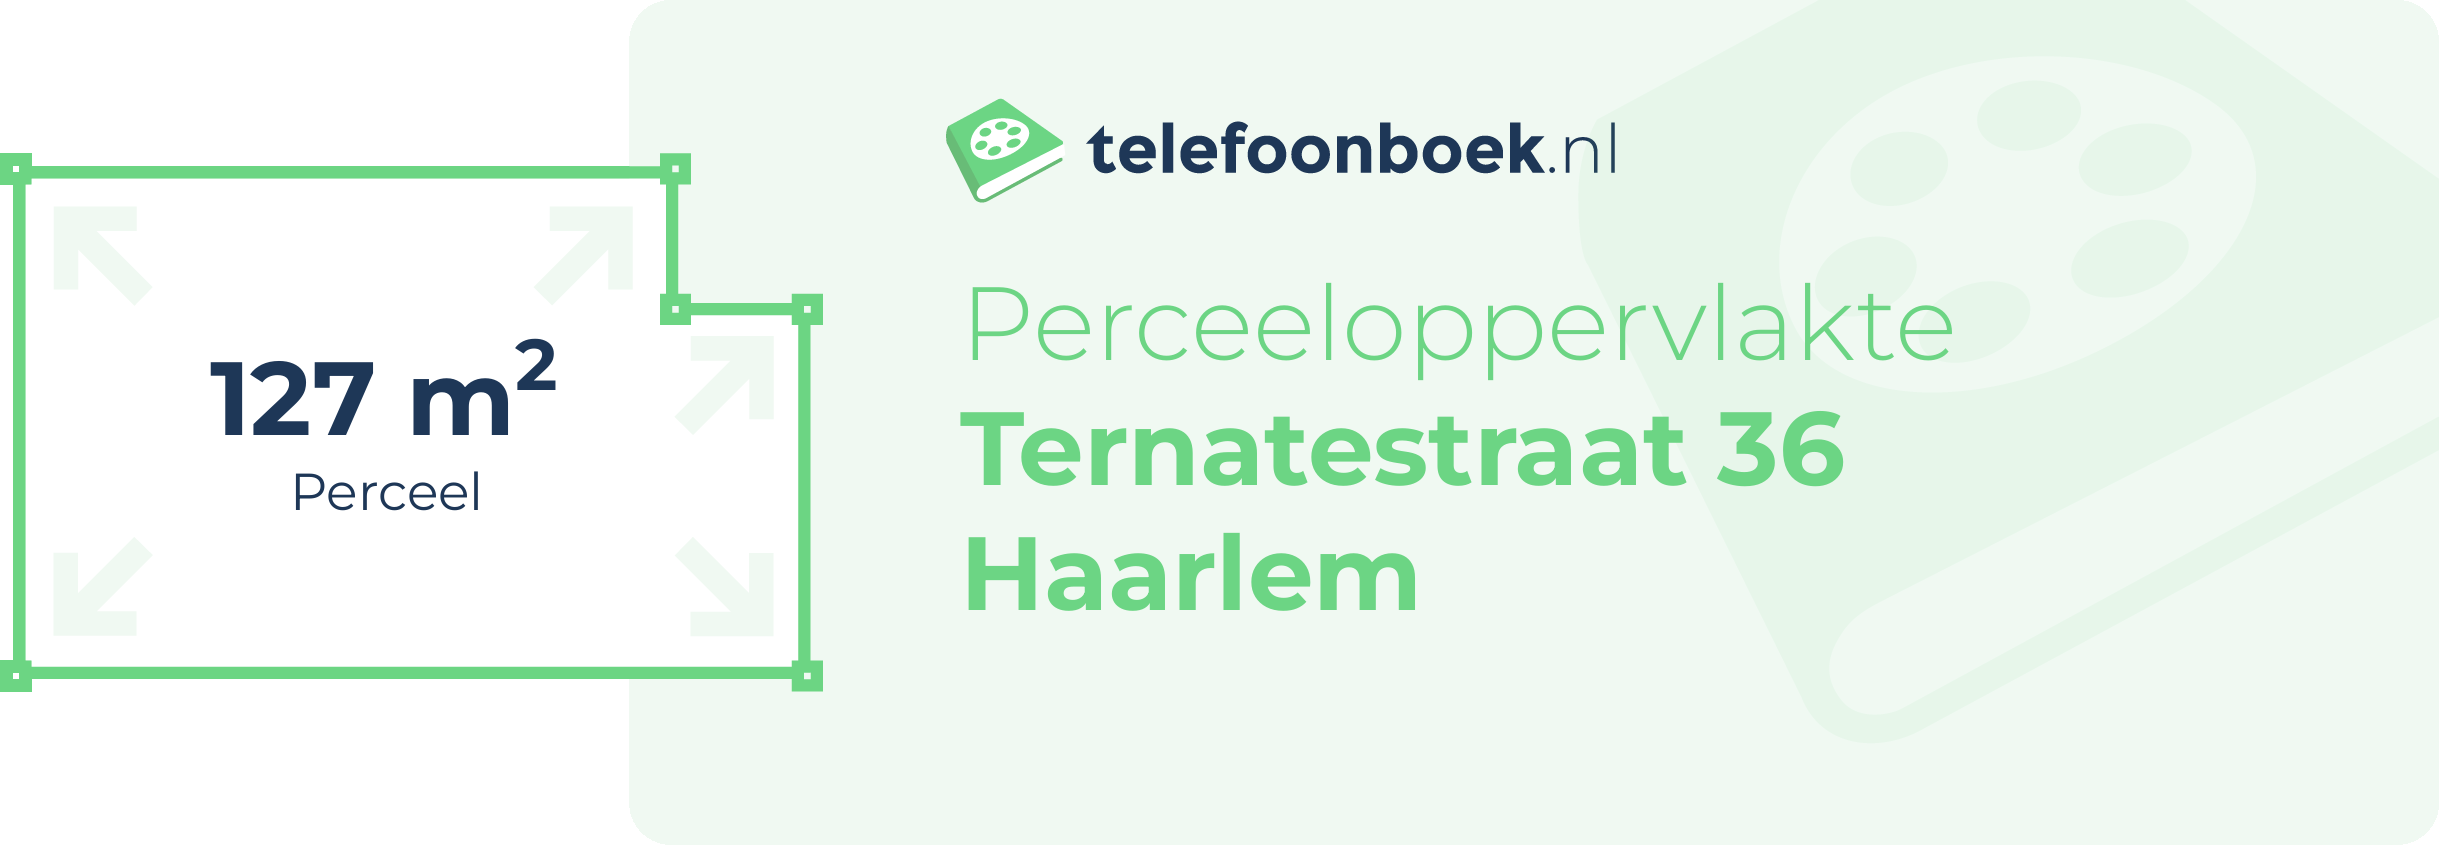 Perceeloppervlakte Ternatestraat 36 Haarlem